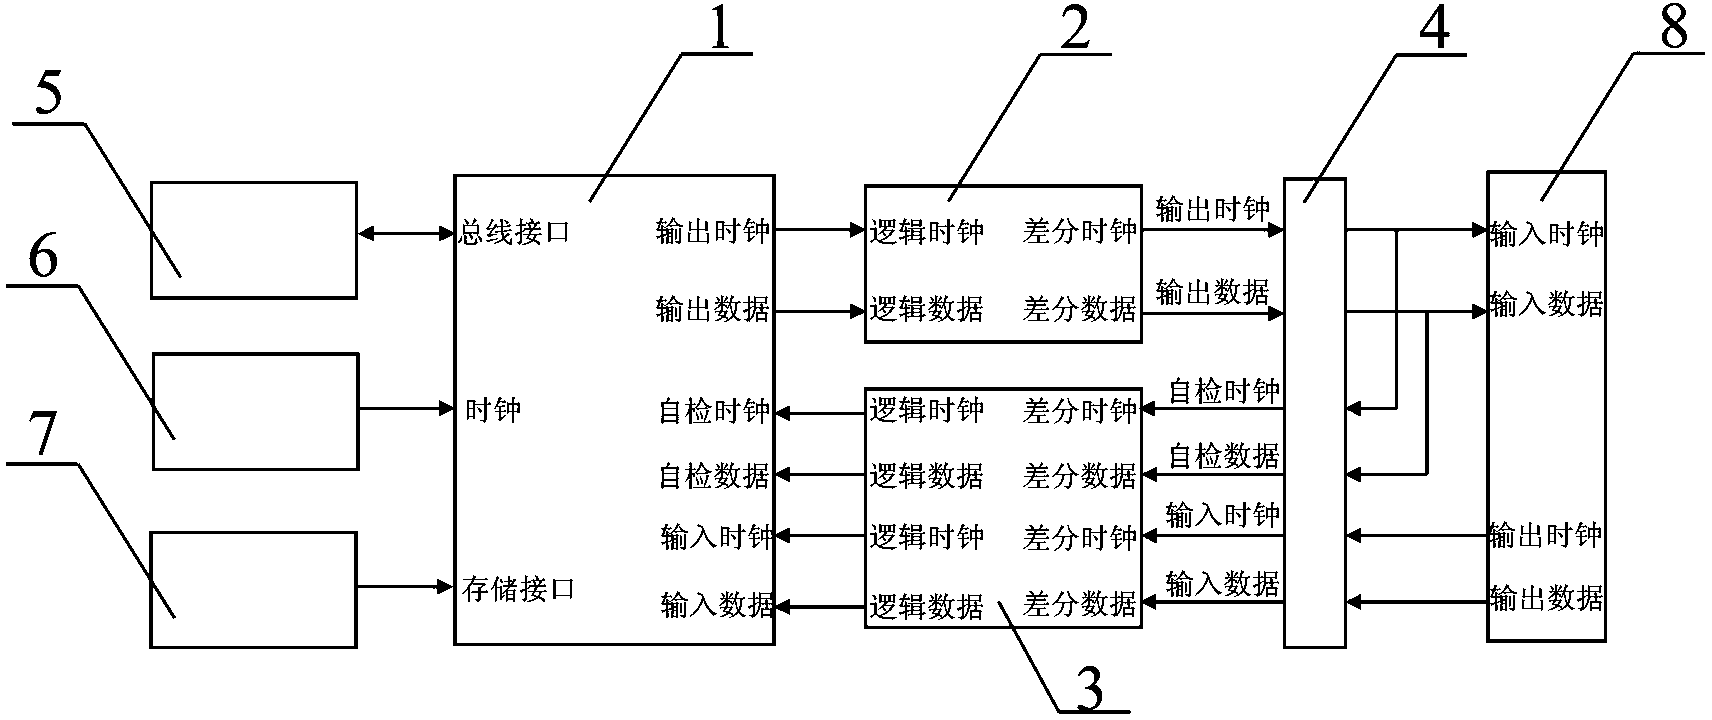 SDLC (System Development Life Cycle) protocol bus communication testing device based on FPGA (Field-Programmable Gate Array)